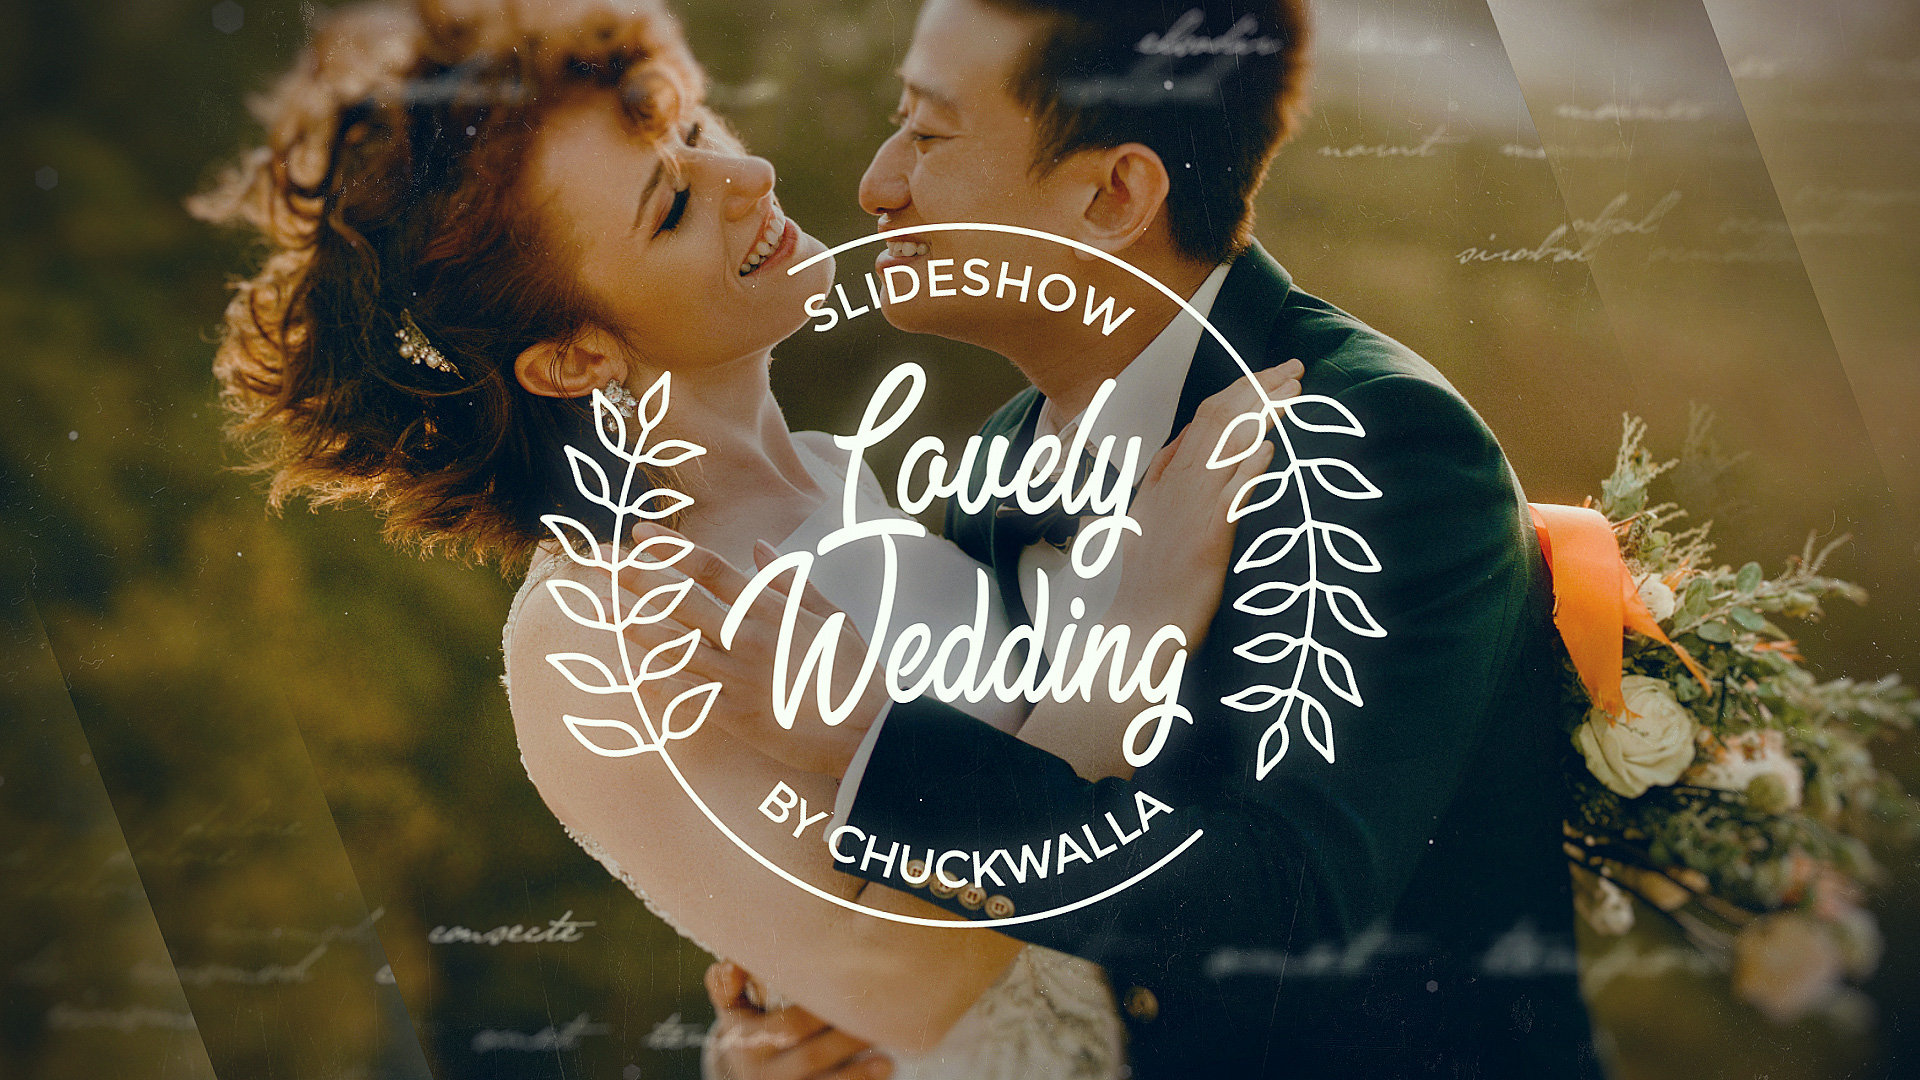 Chuckwalla - Lovely Wedding Slideshow